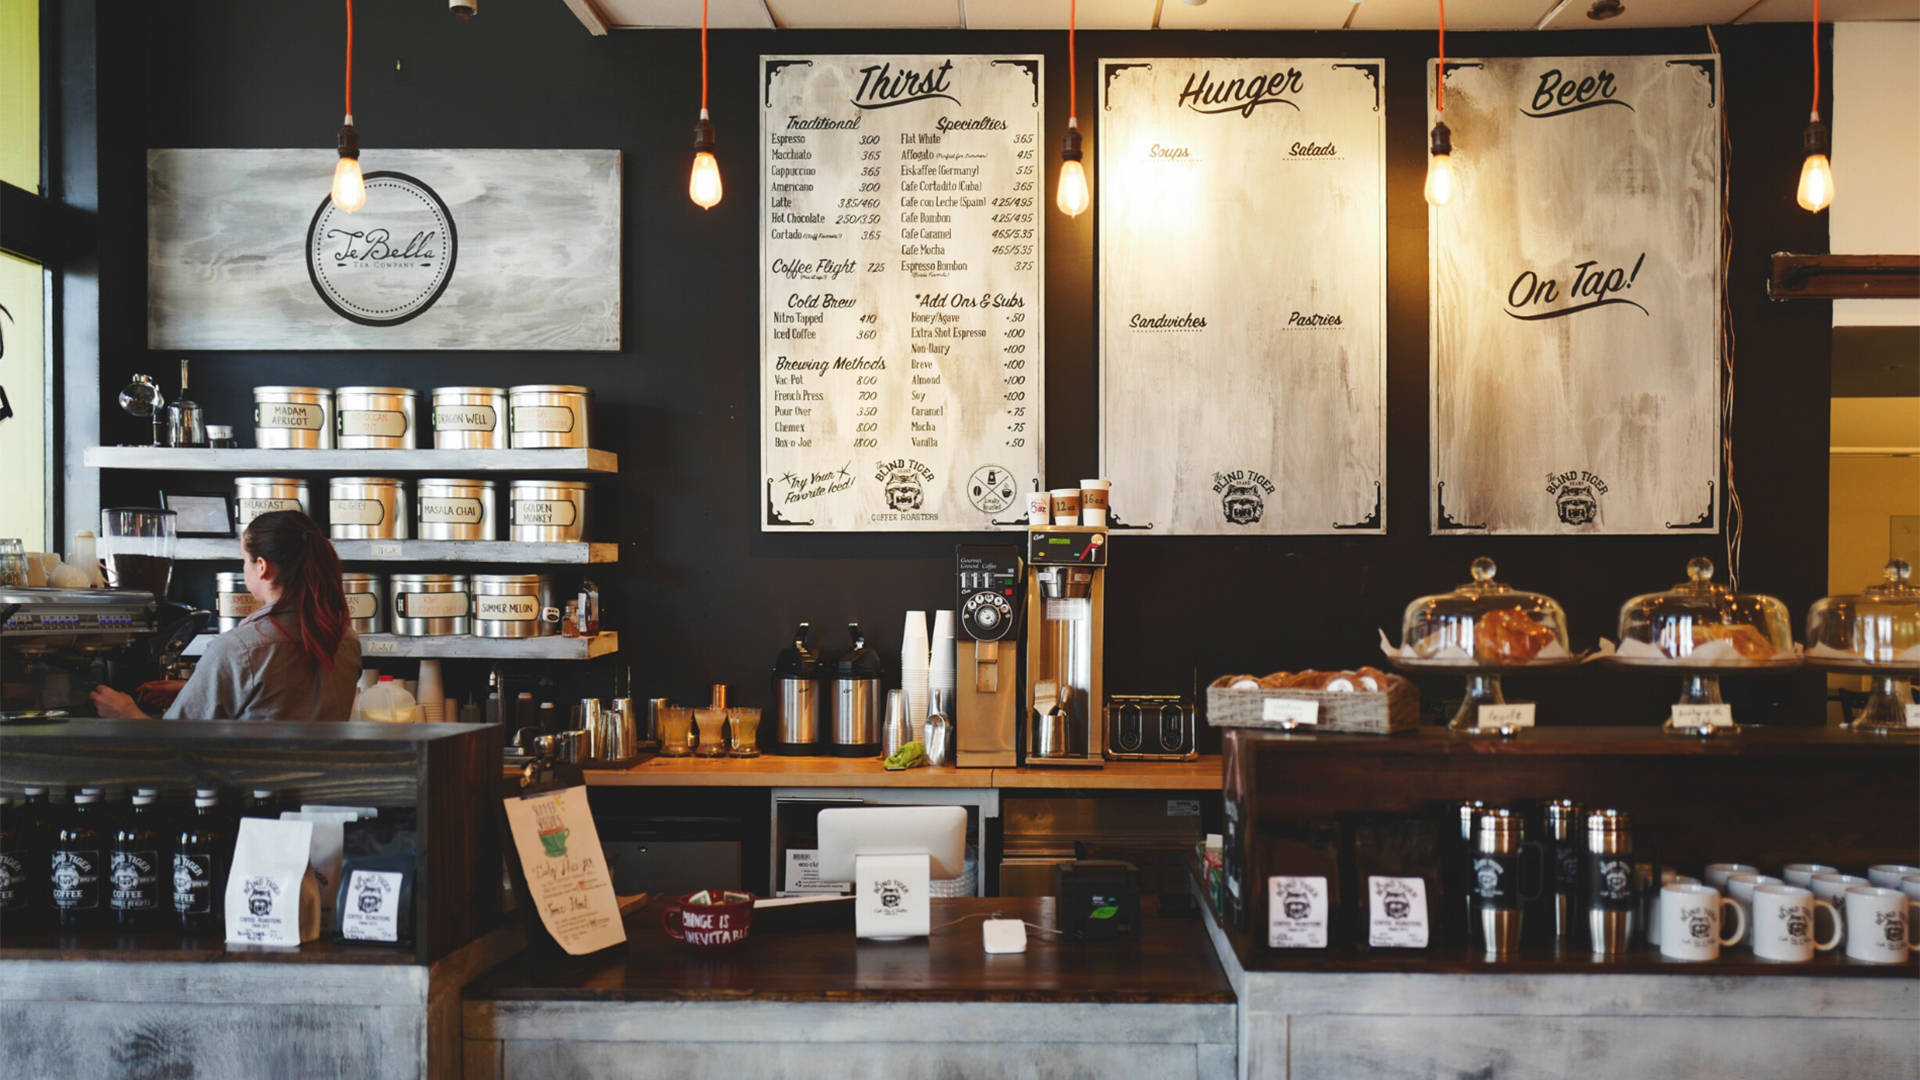 Free Coffee Shop Wallpaper Downloads, Coffee Shop Wallpaper for FREE